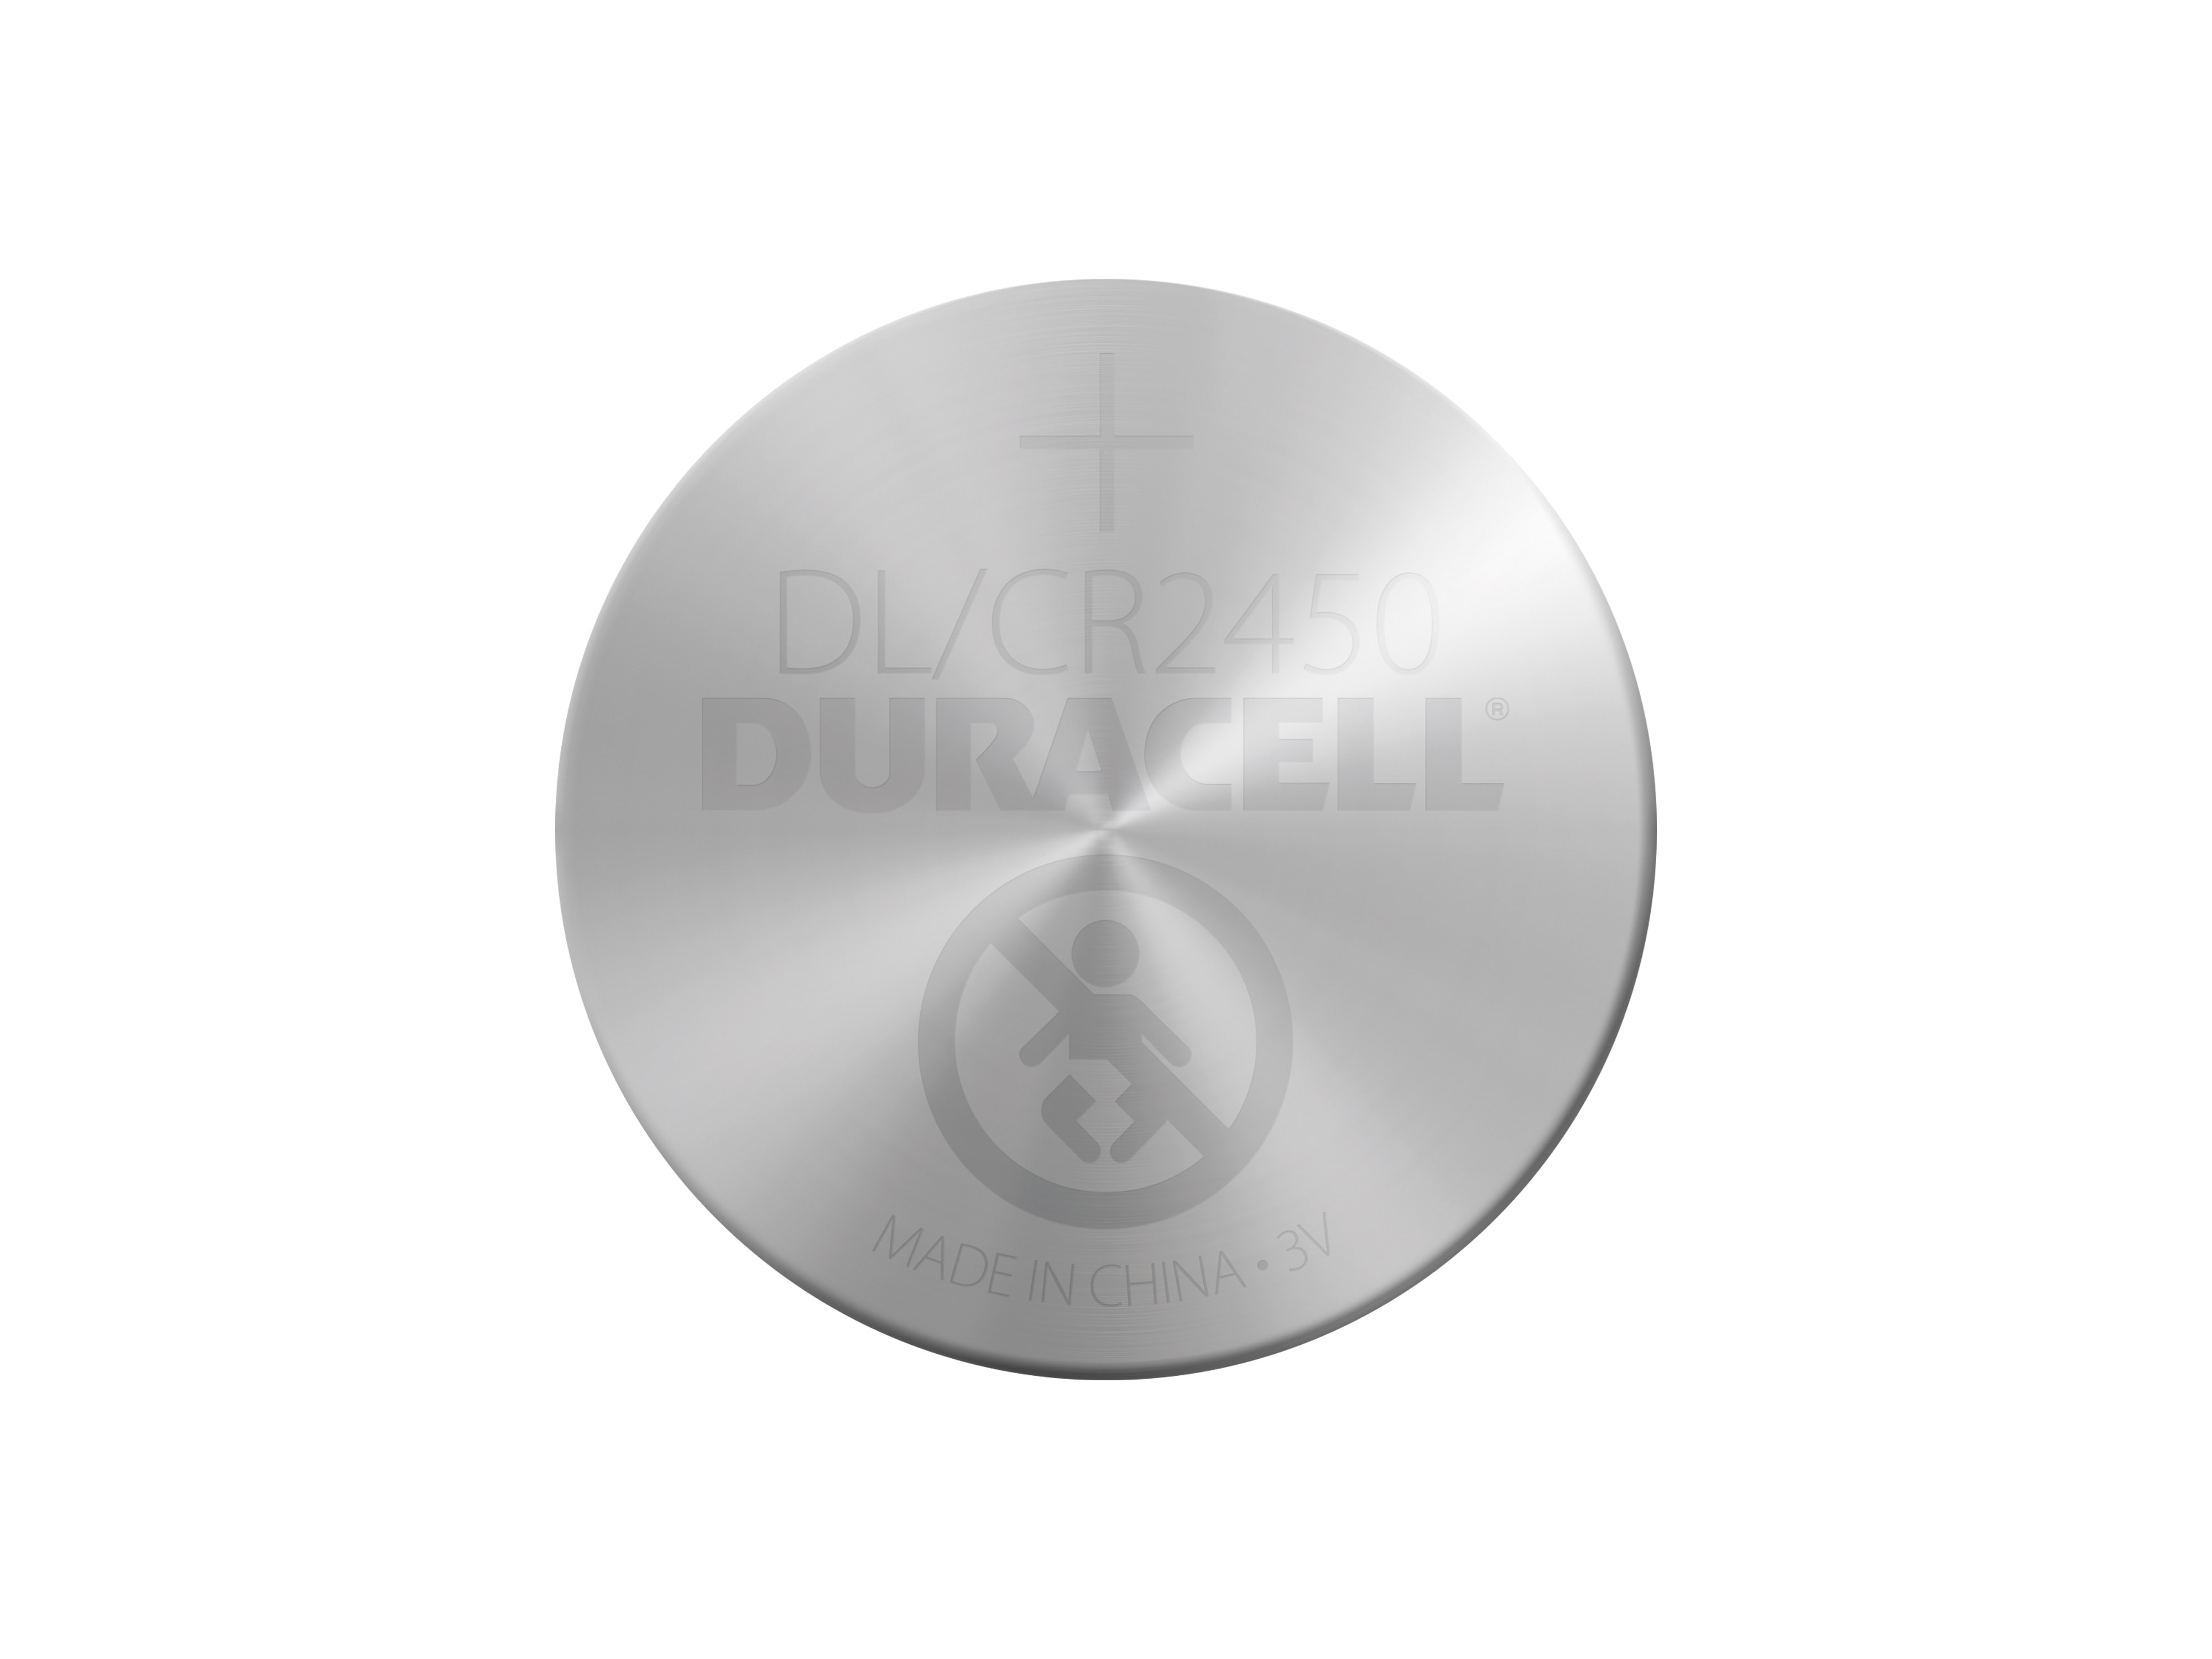 DURACELL Lithium-Knopfzelle, CR2450, 3V, Electronics, 2 Stück